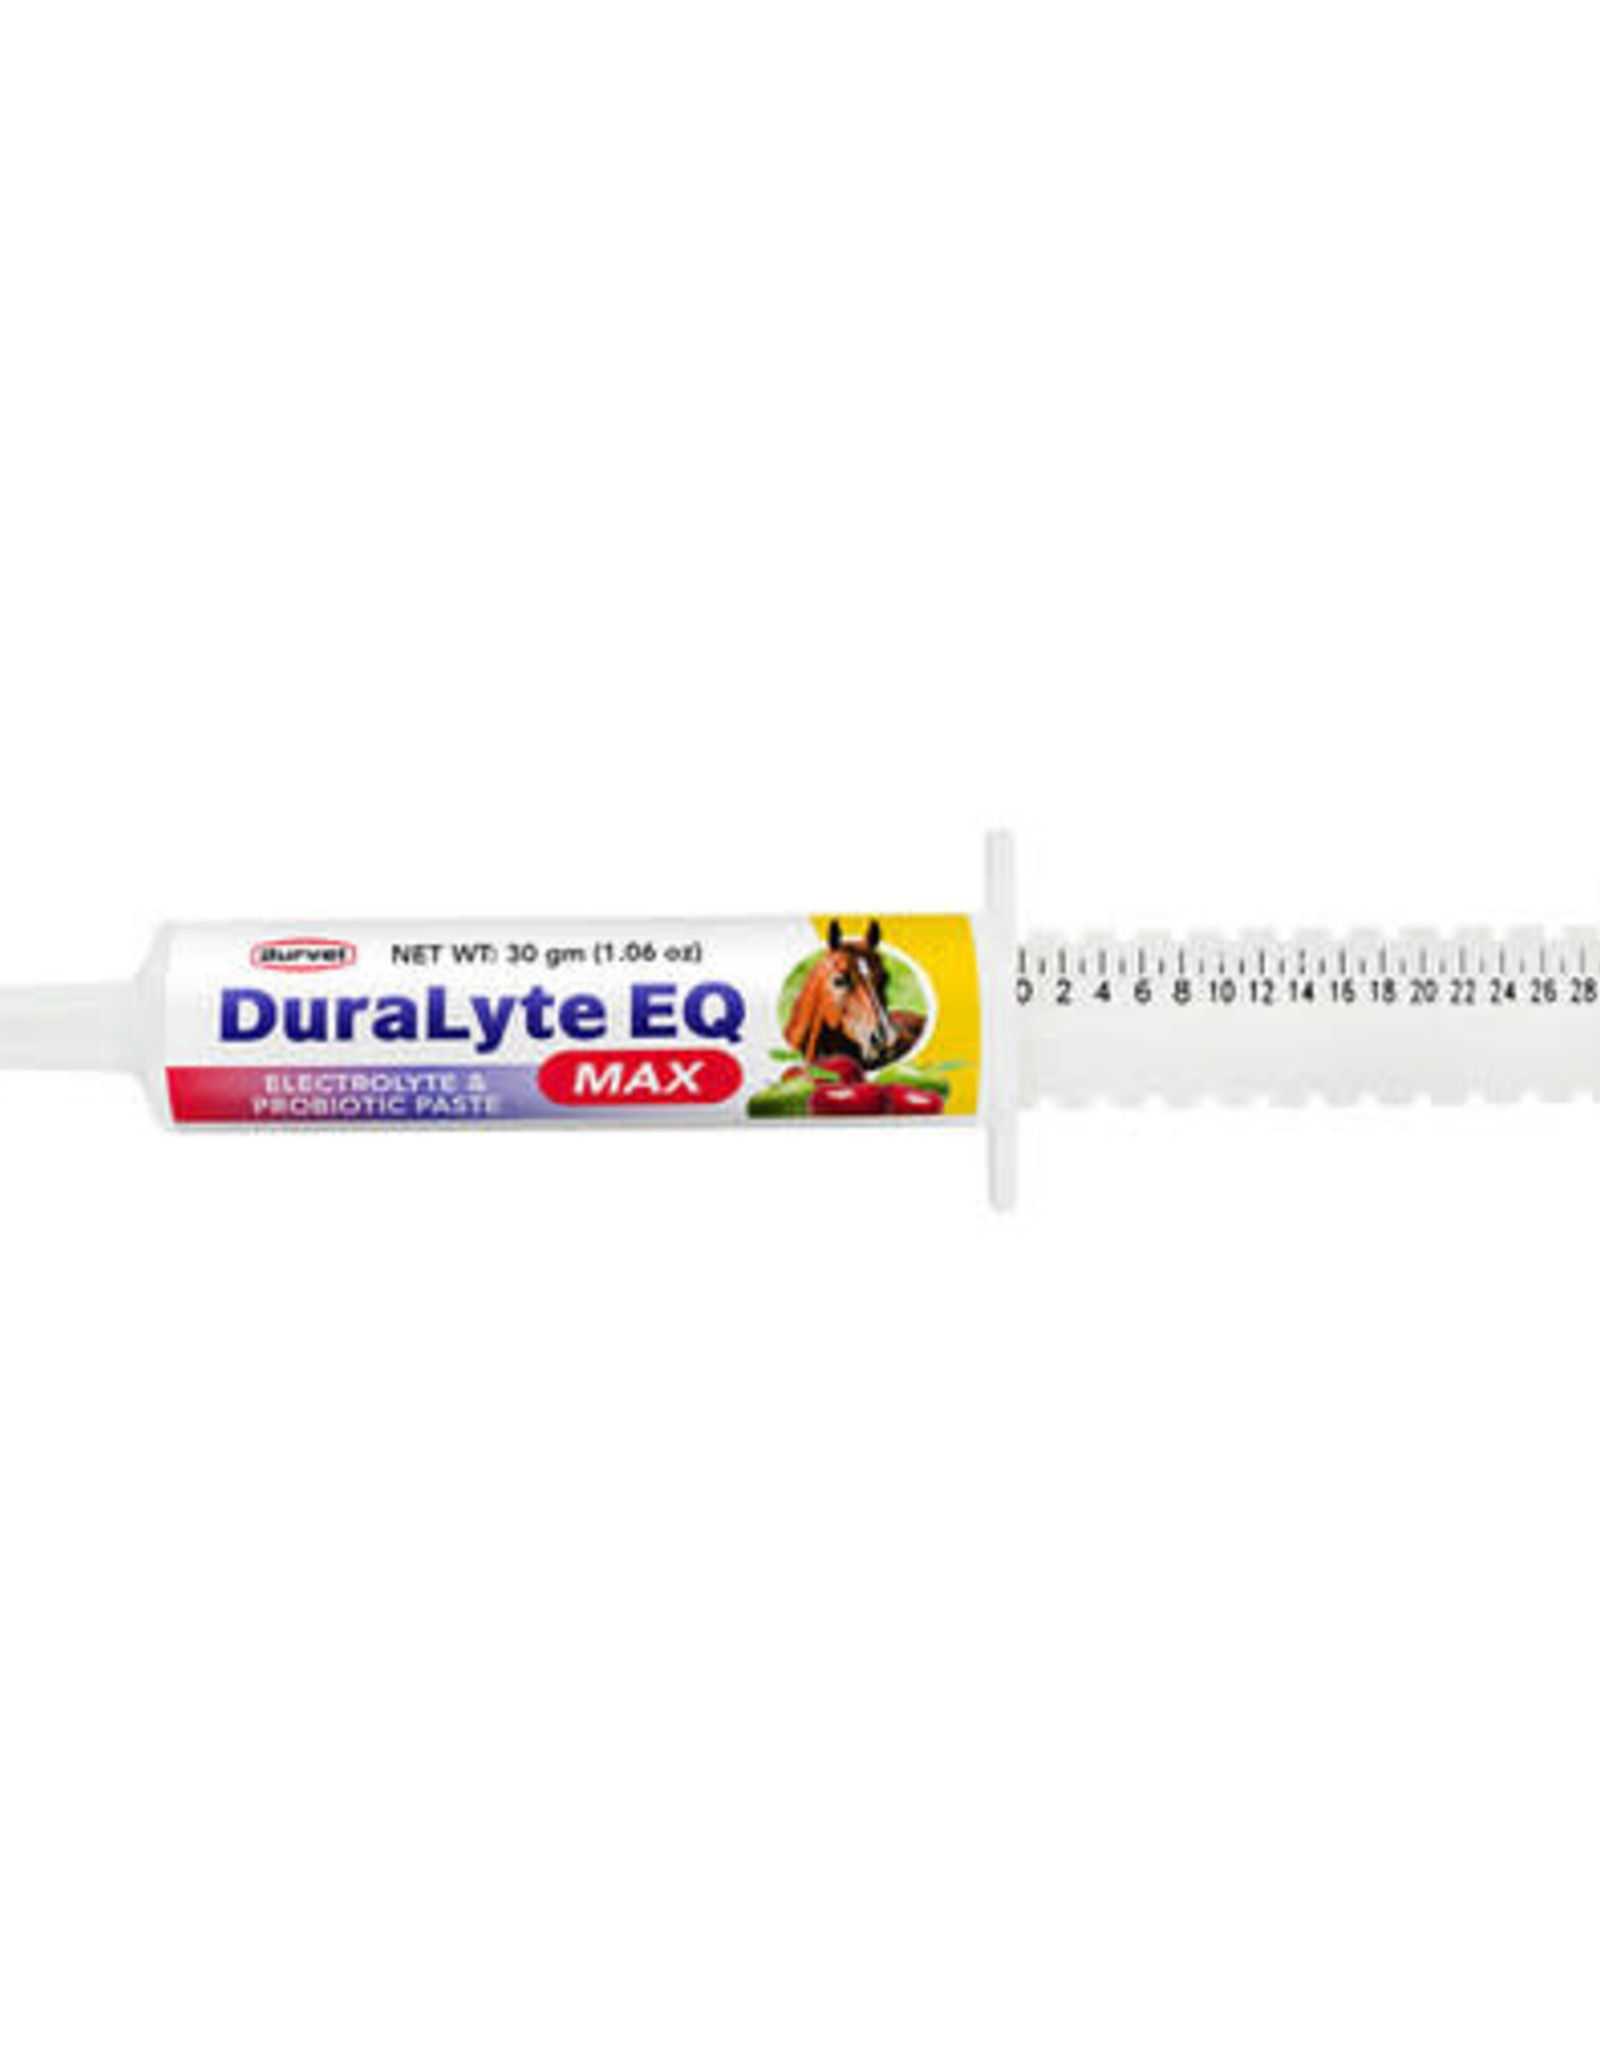 DuraLyte EQ Max elecrolyte probiotic Paste